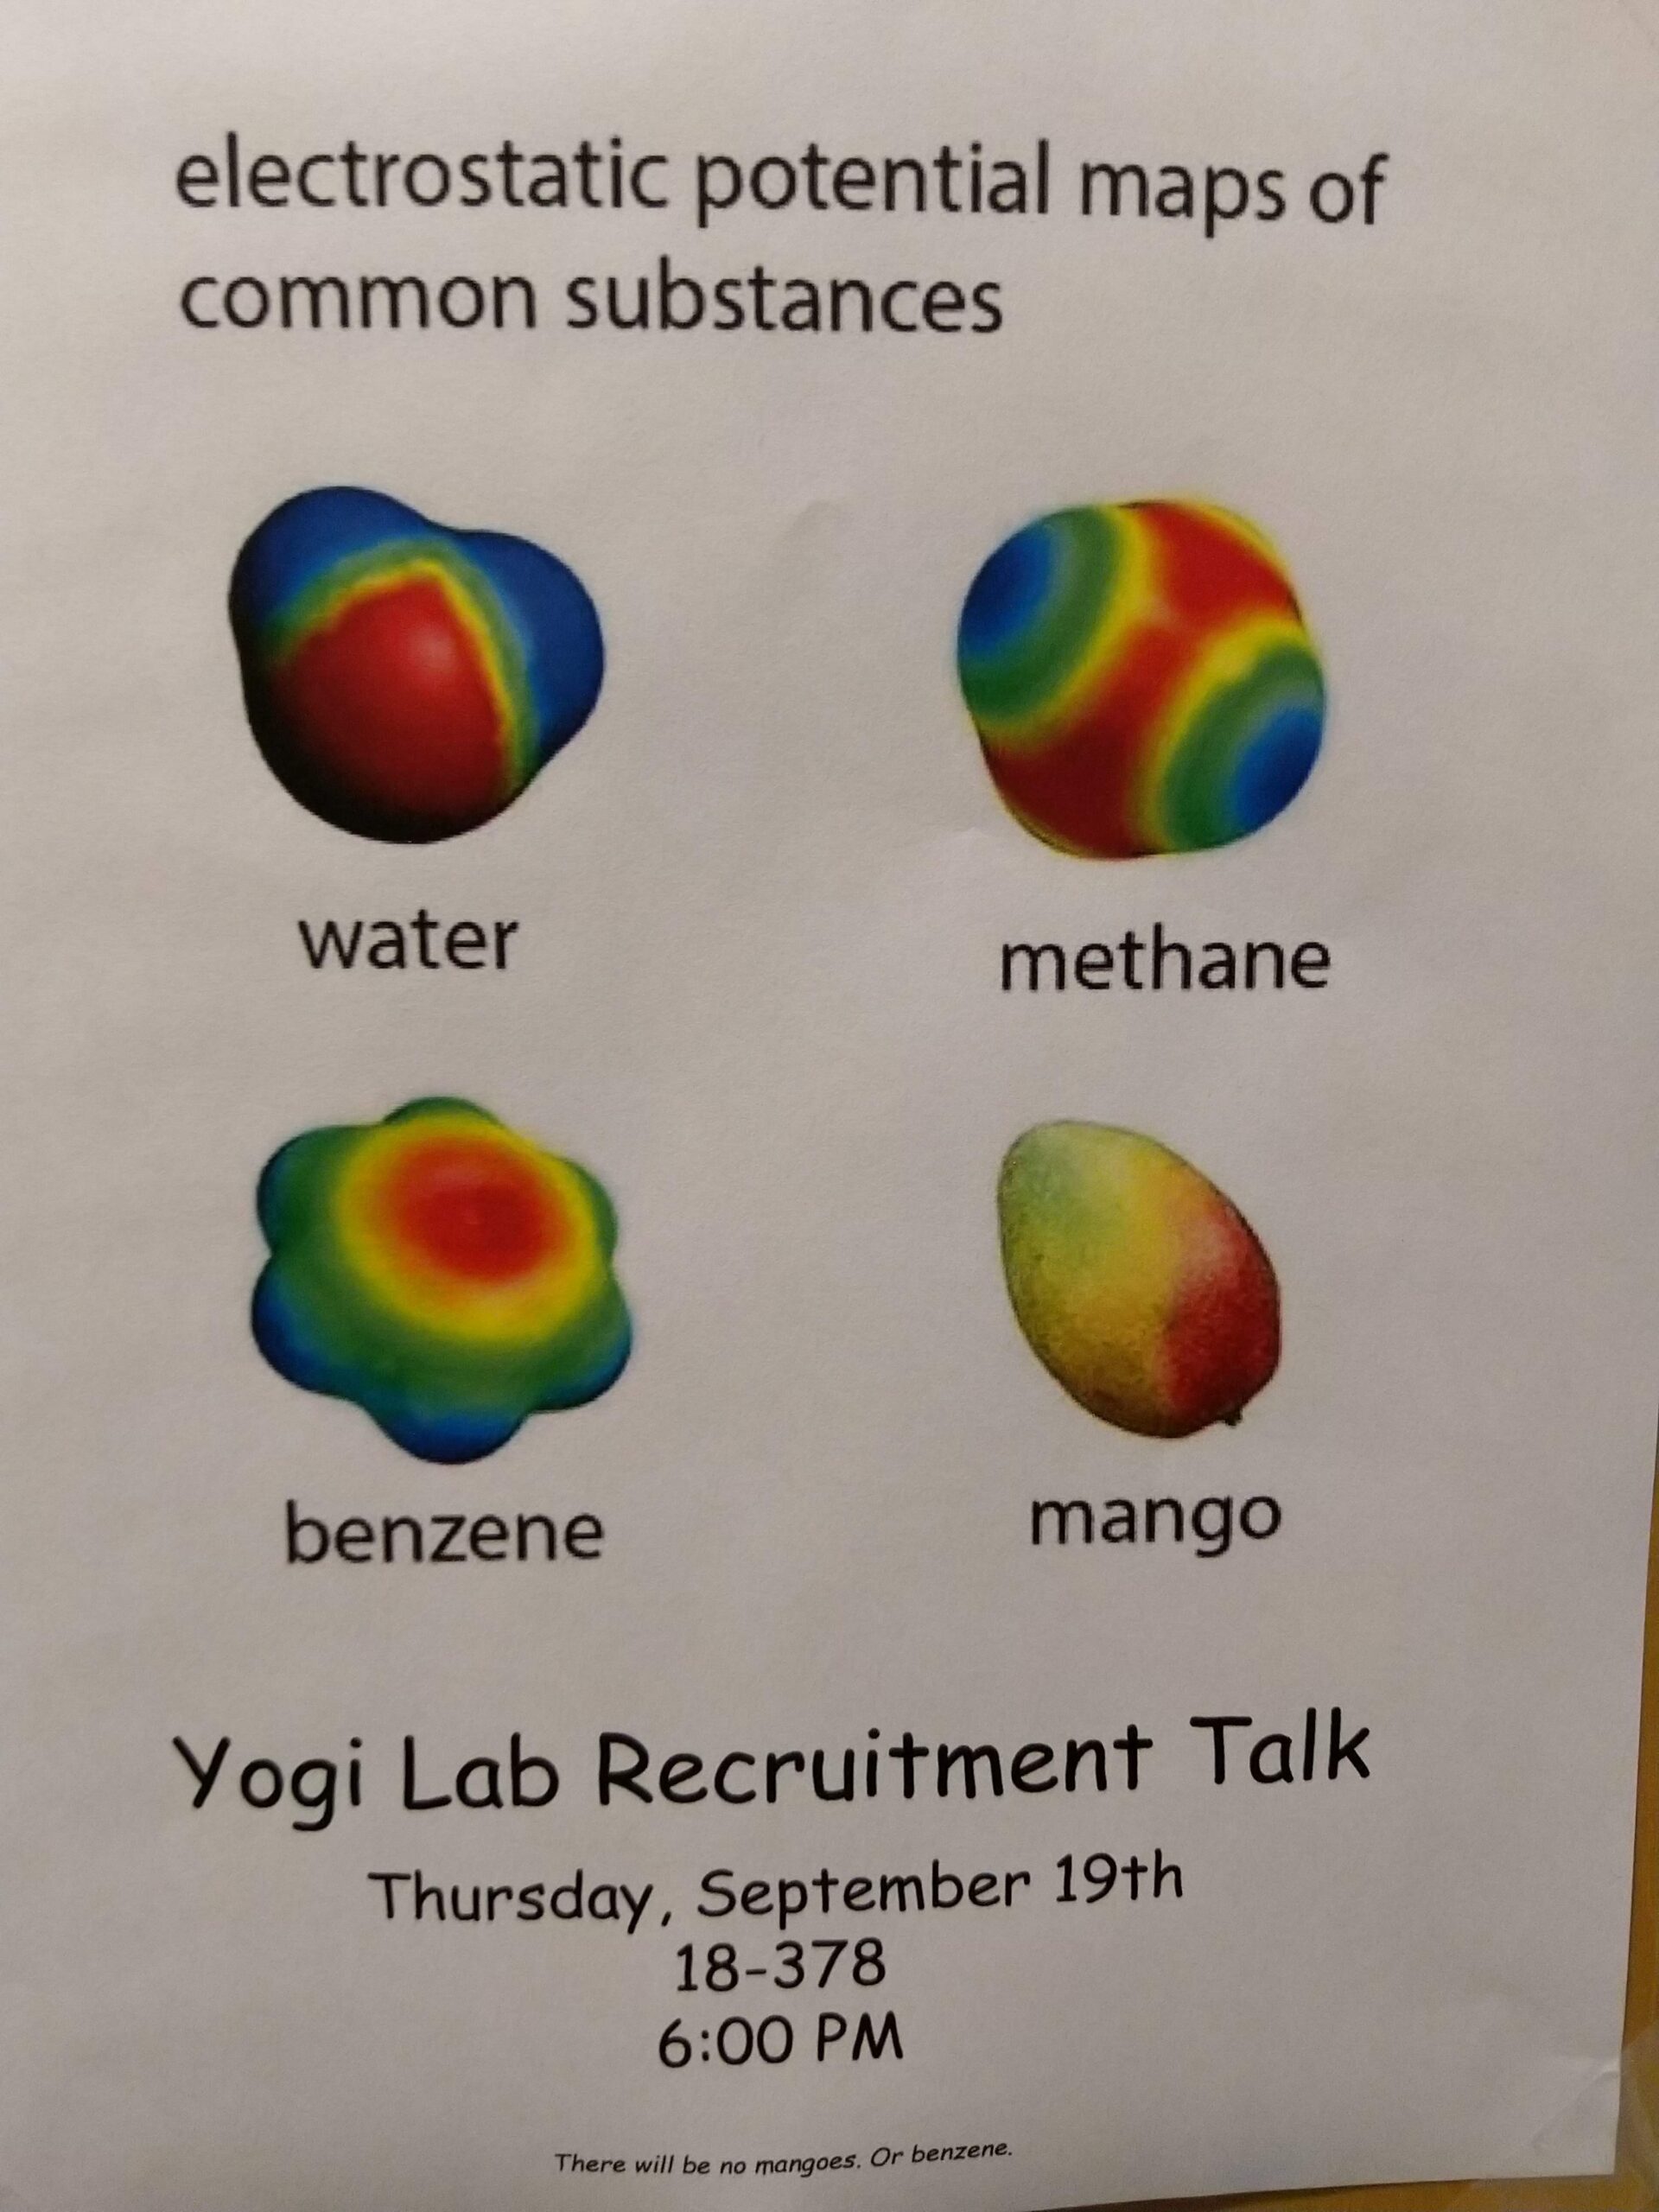 yogi lab recruitment talk poster